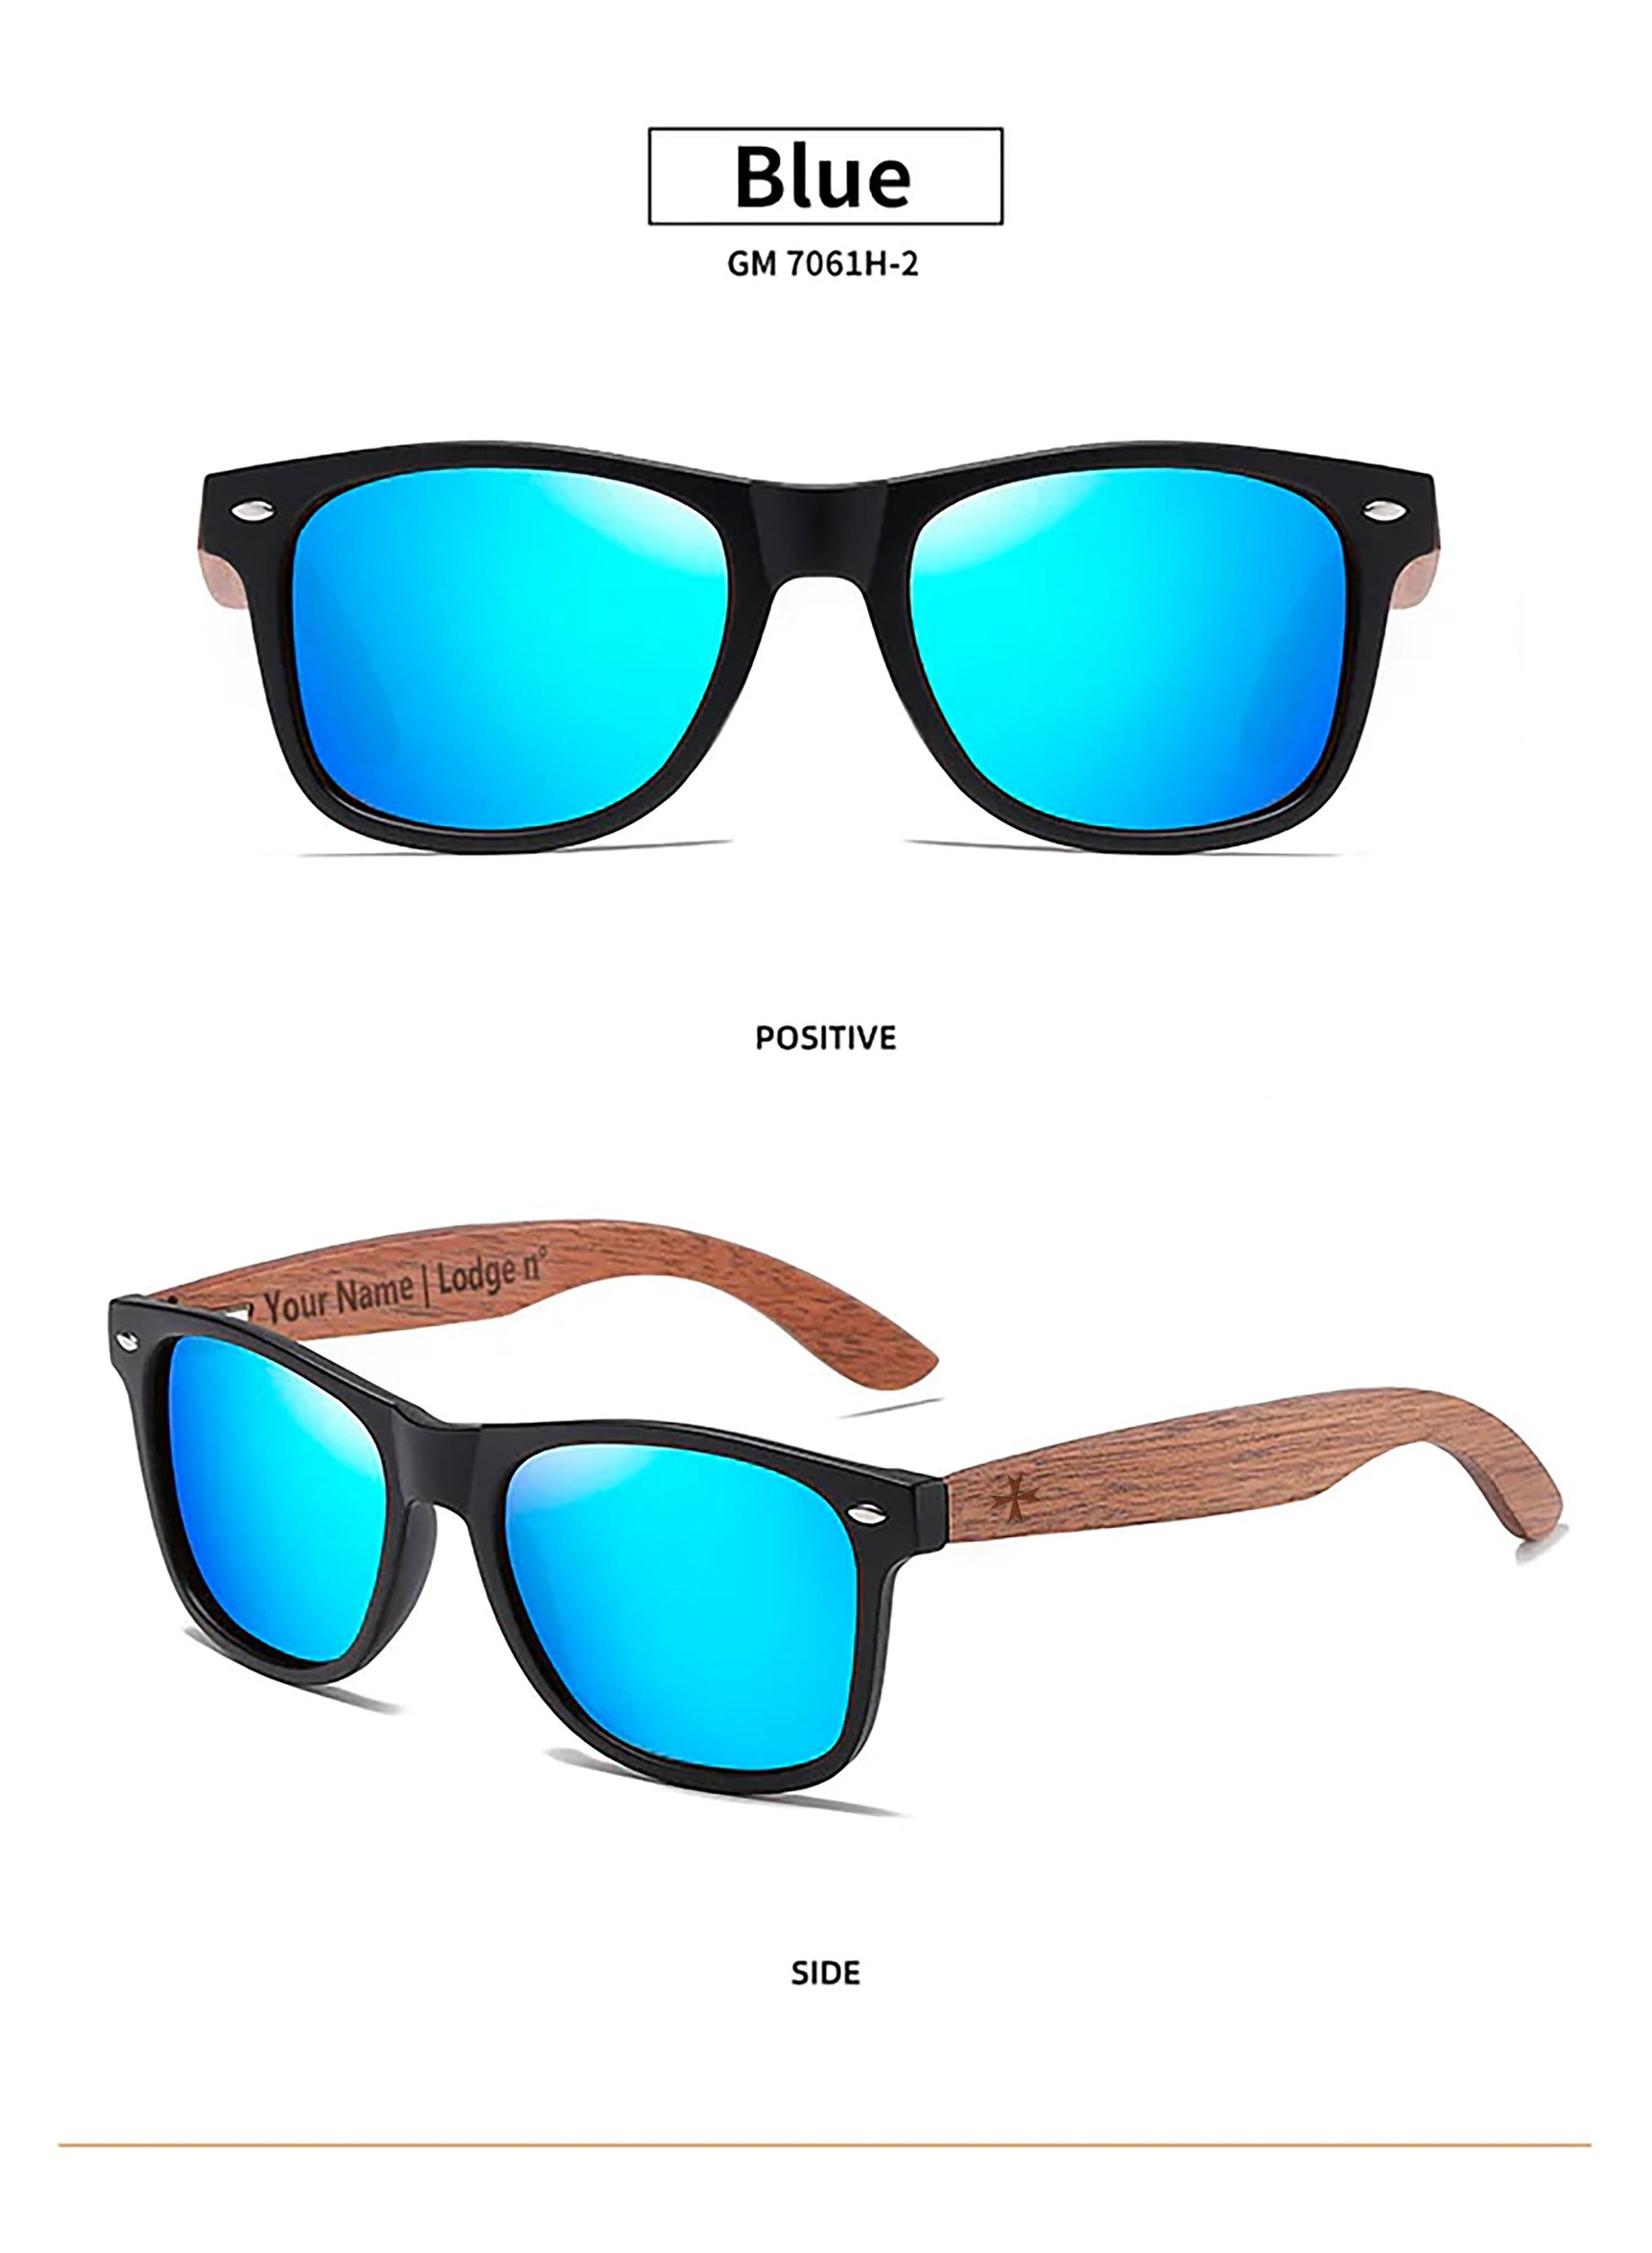 Grand Master Blue Lodge Sunglasses - UV Protection - Bricks Masons